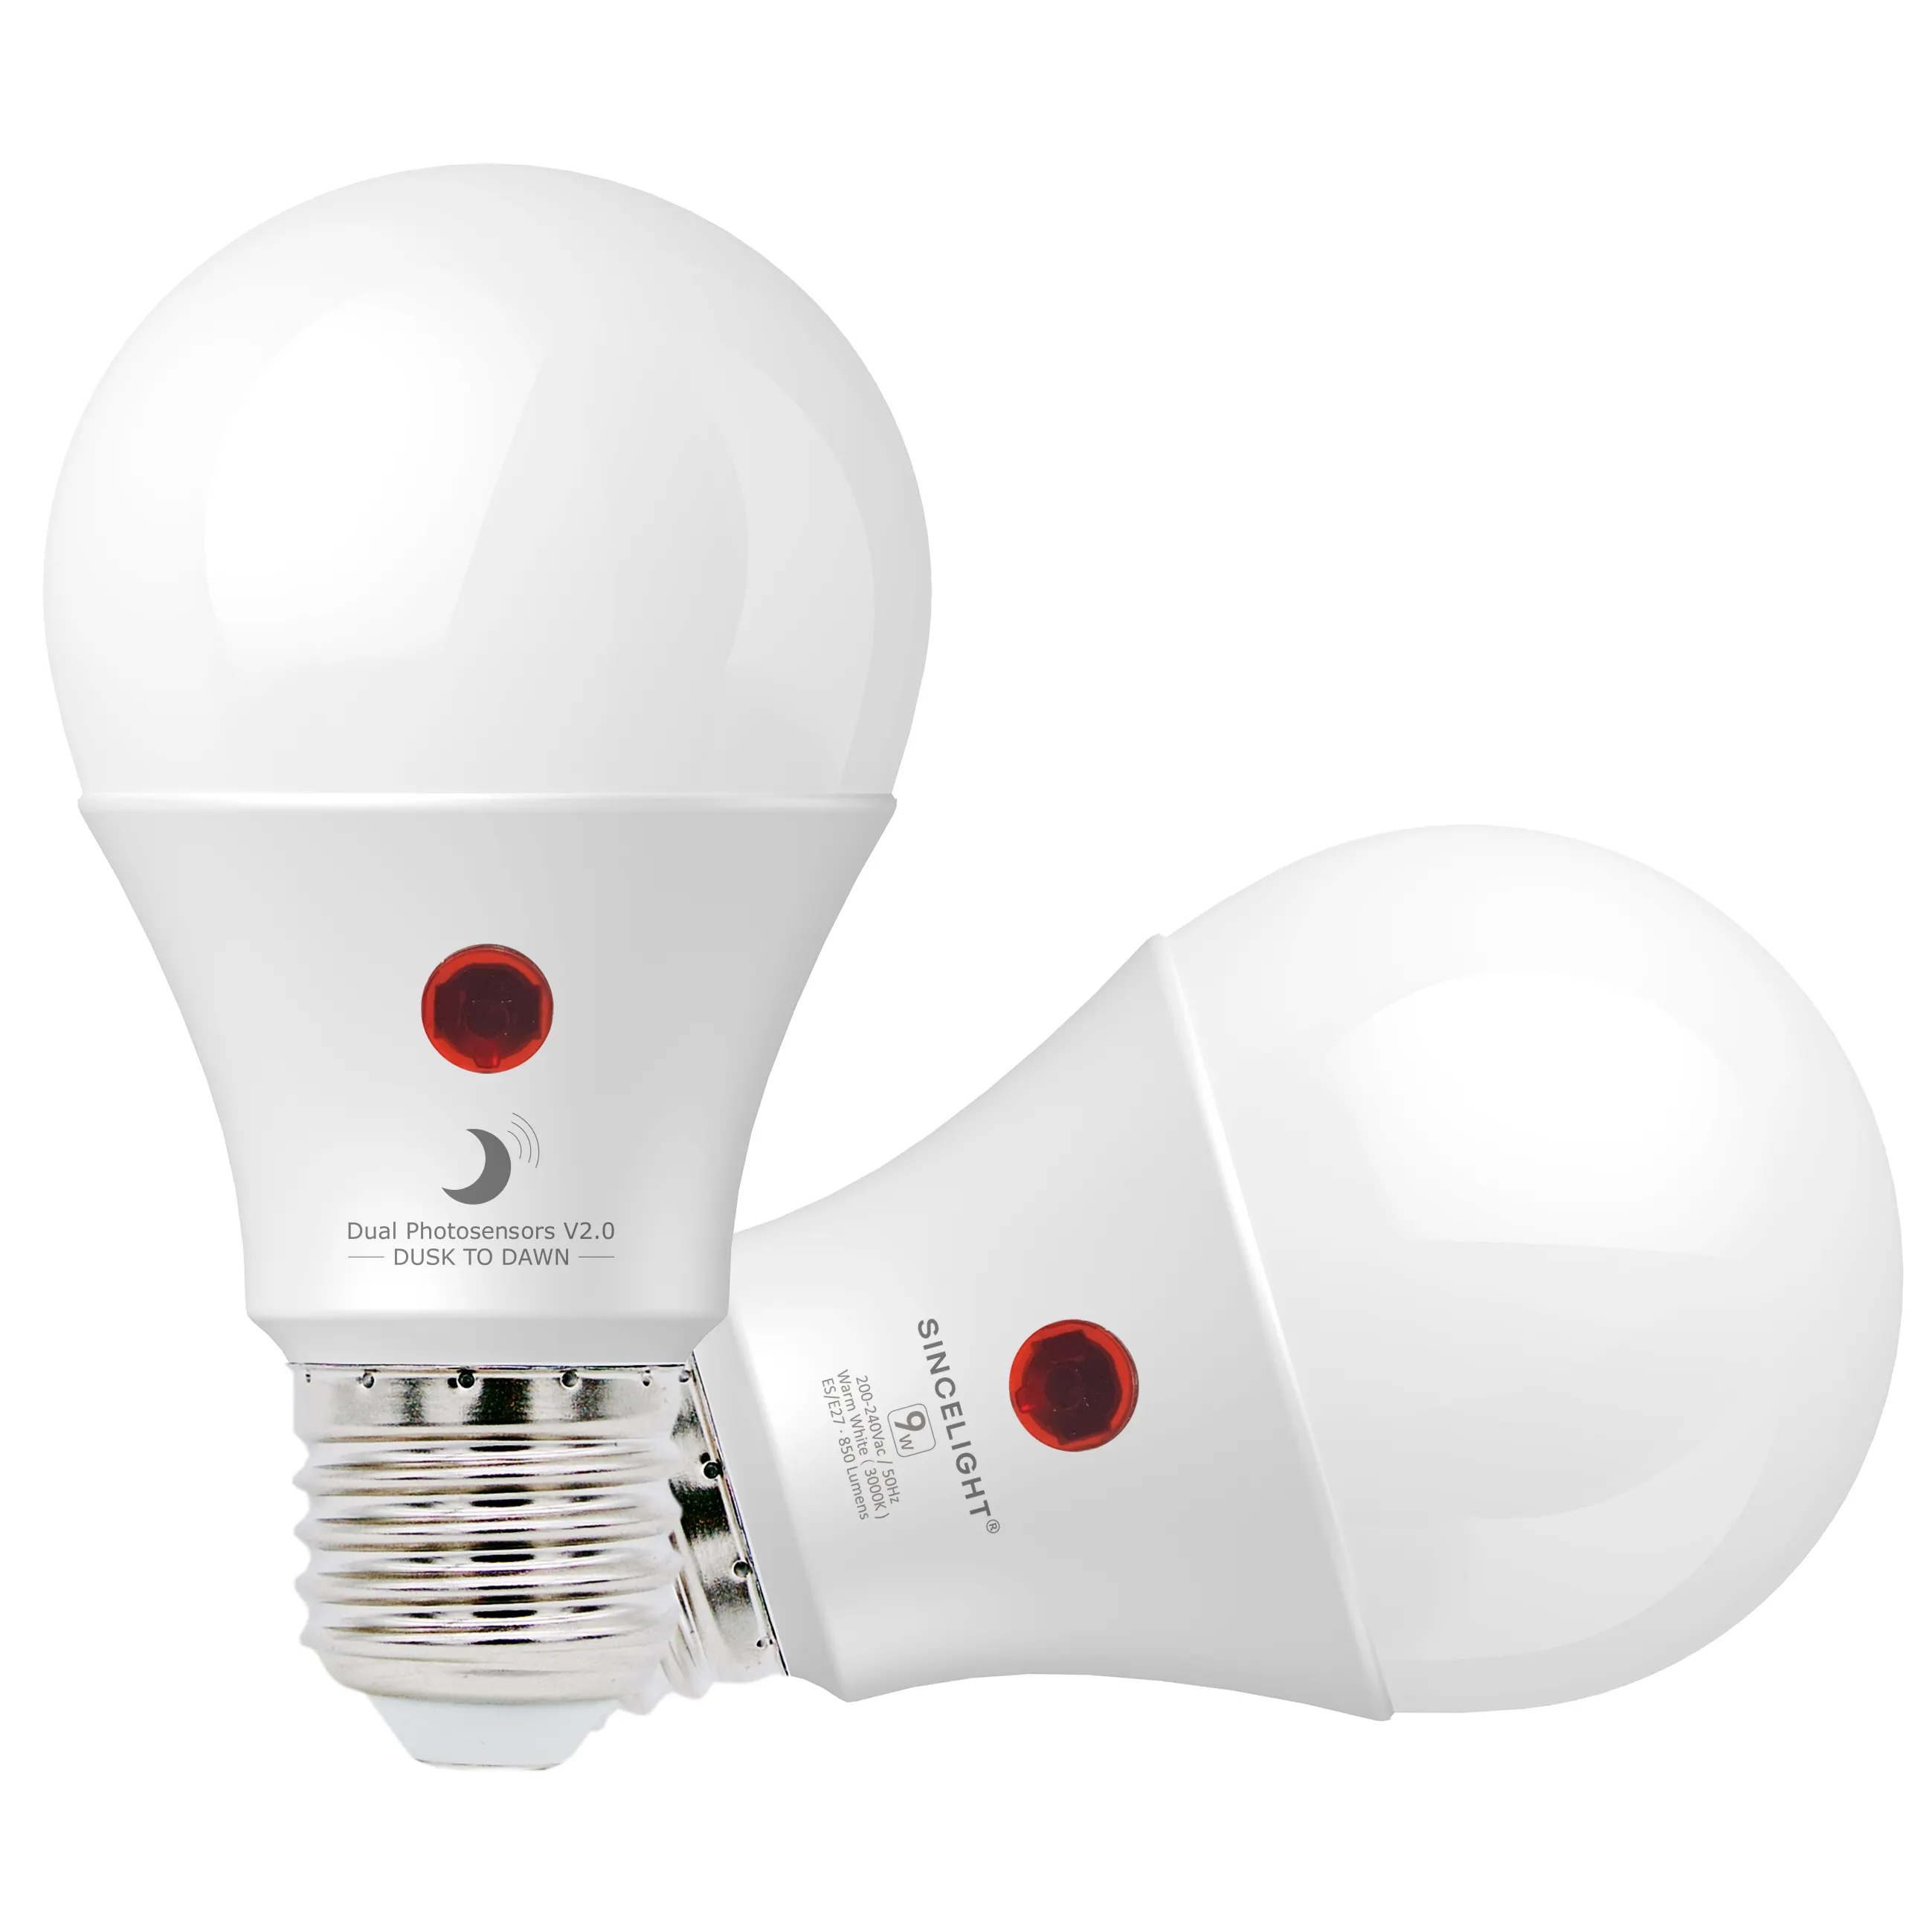 E27 Dusk to Dawn LED DayLight Sensor Bulb with Dual Photosensors Automatic ON/OFF Night Light Security Light